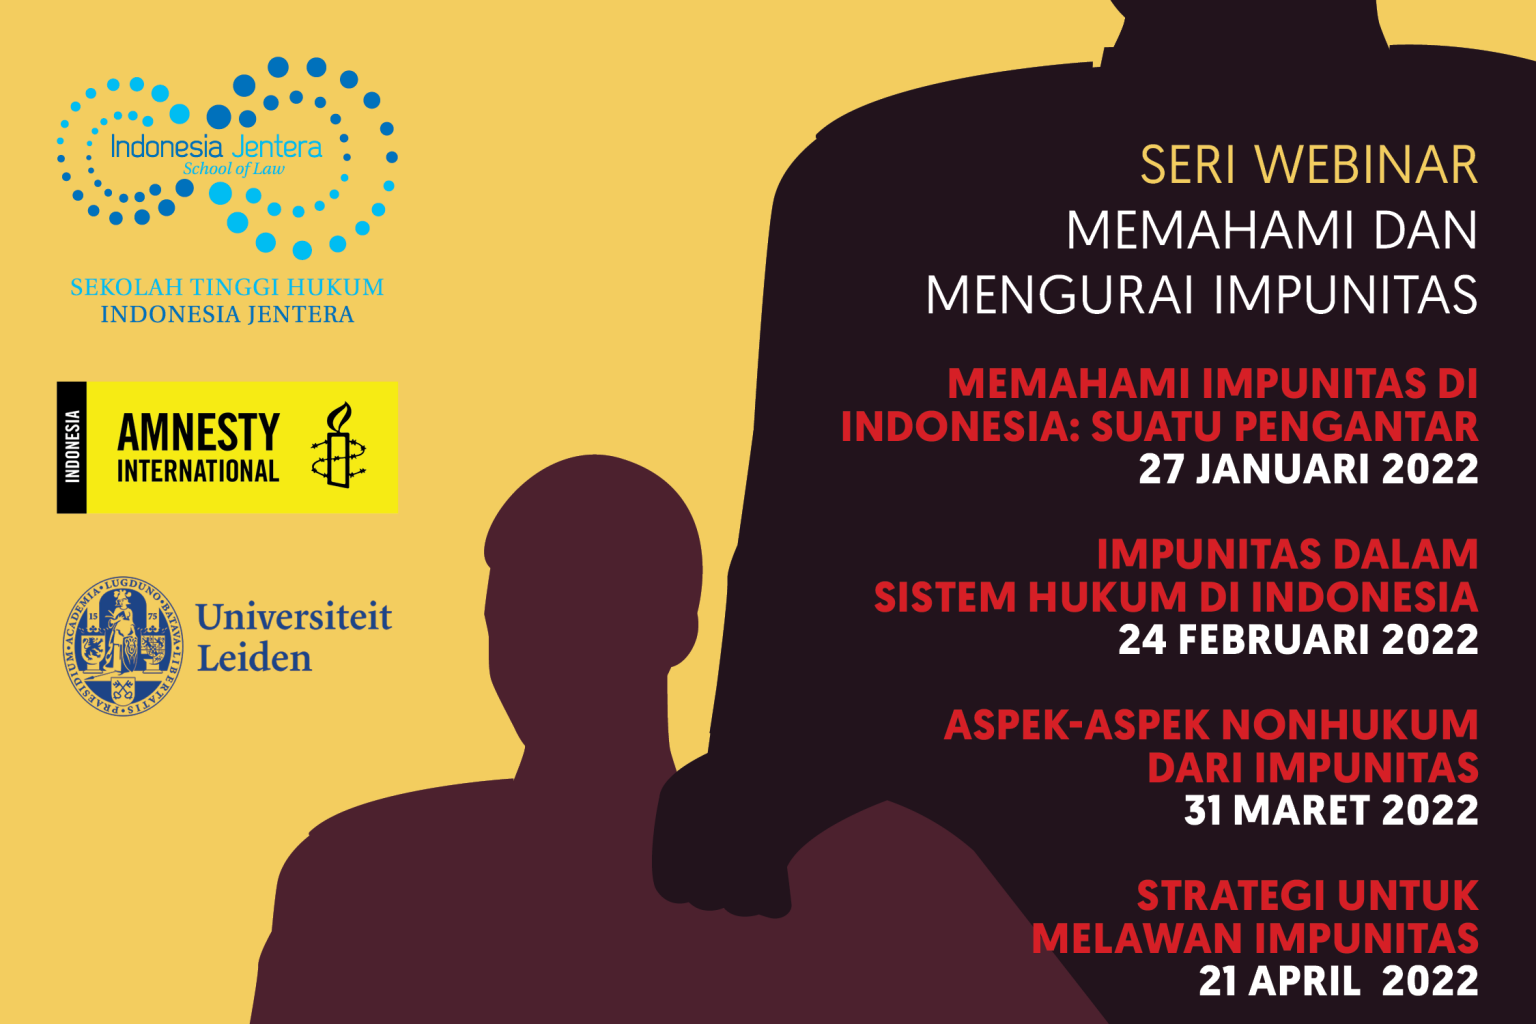 Seri Webinar: Memahami dan Mengurai Impunitas di Indonesia Memahami Impunitas di Indonesia: Suatu Pengantar